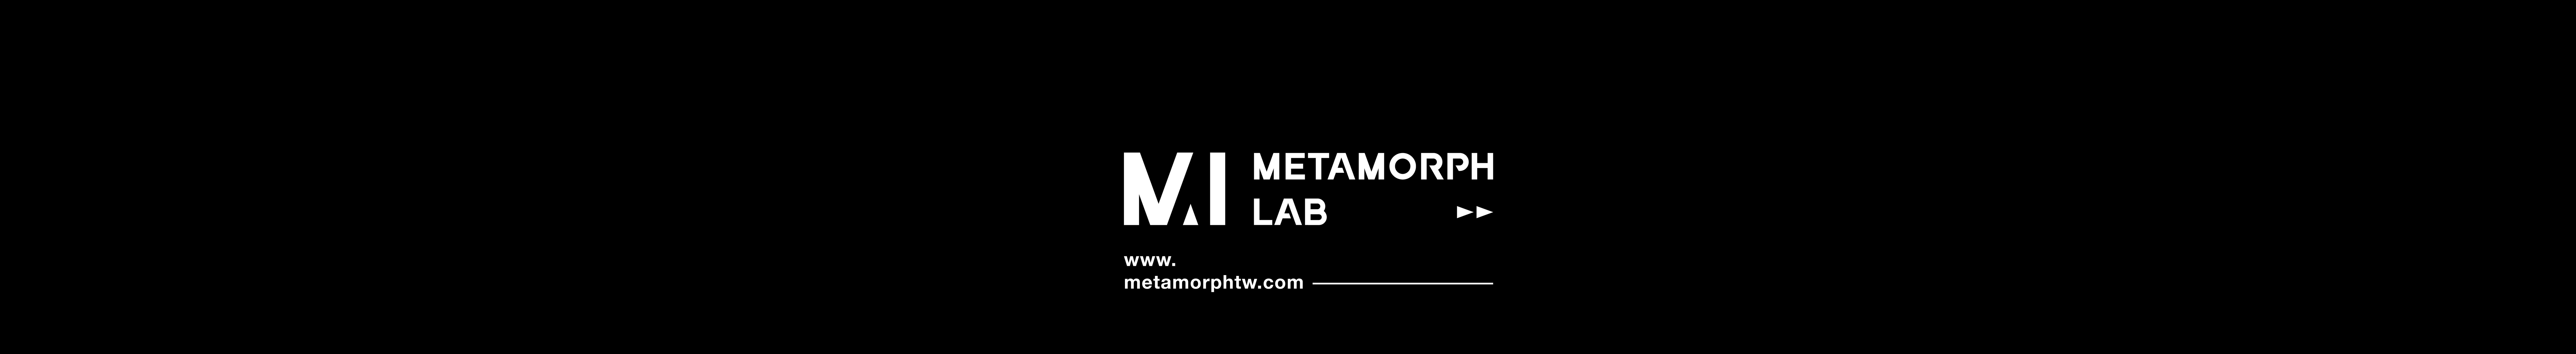 Baner profilu użytkownika METAMORPH LAB